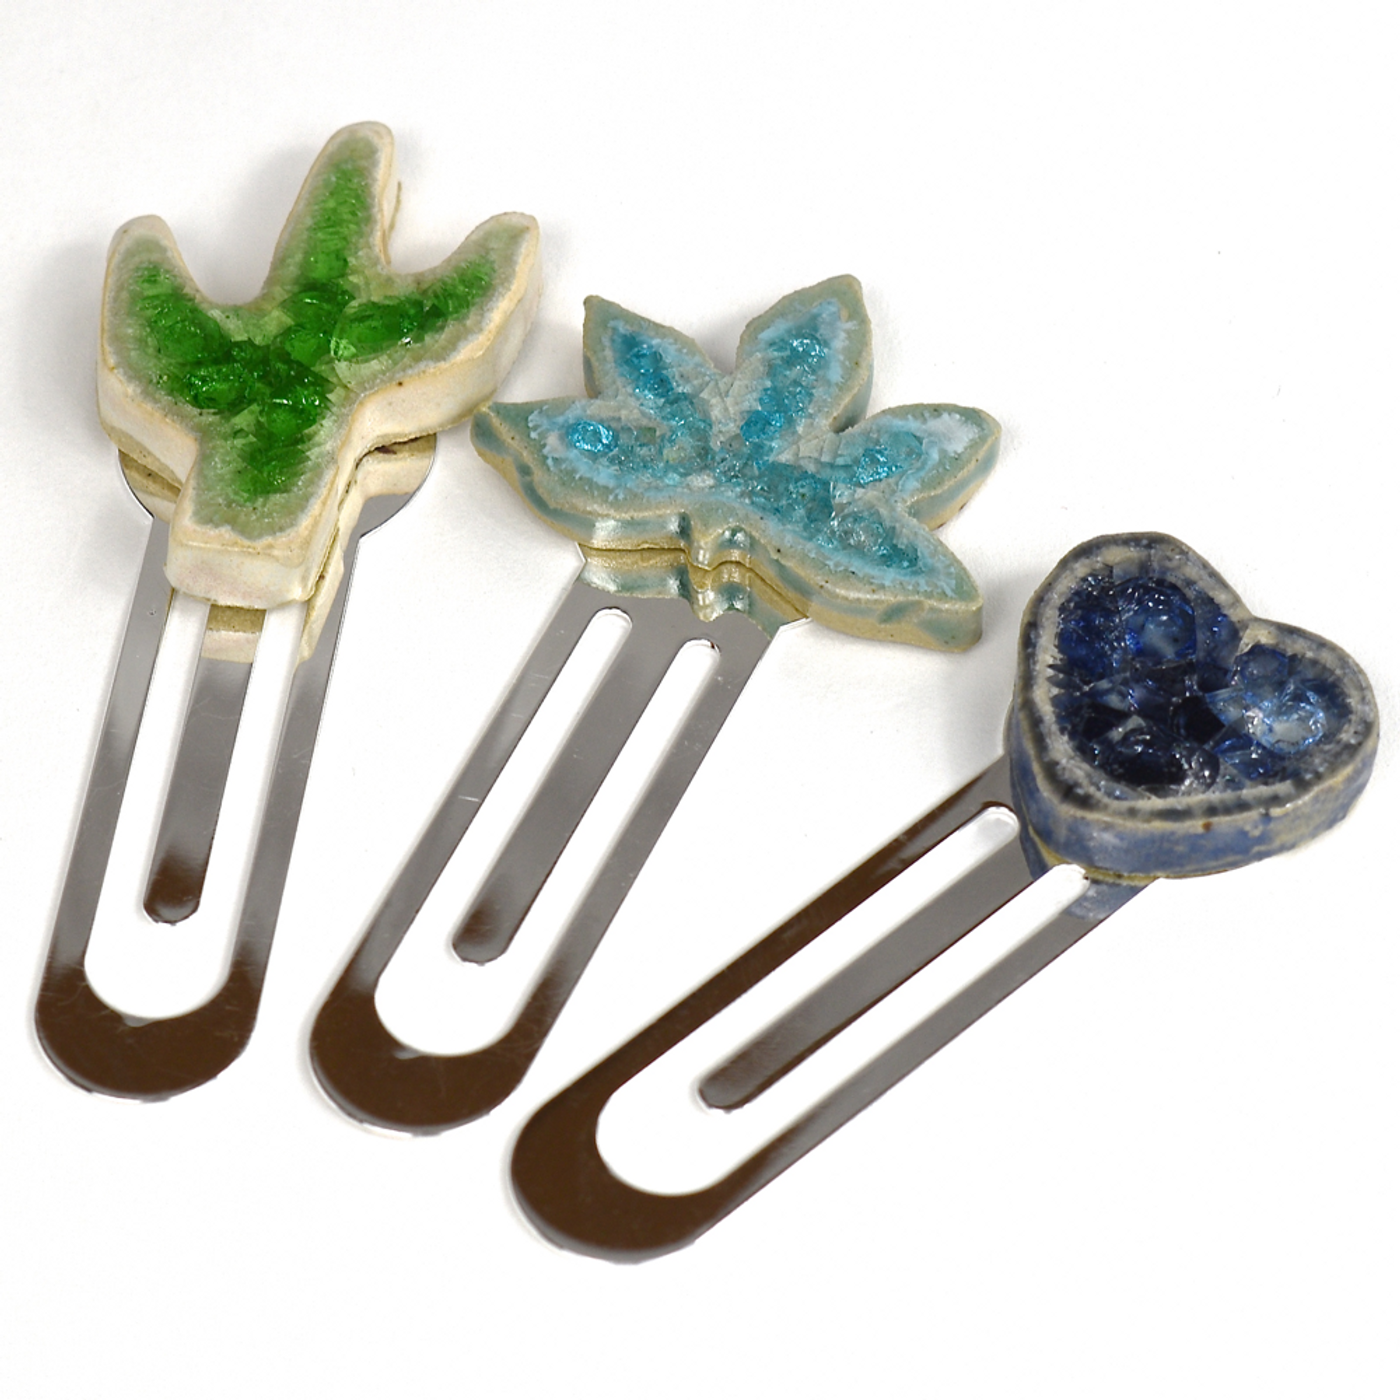 Bookmarks Handmade Glass Gems, Teacher Gift Ideas in Popular Shapes